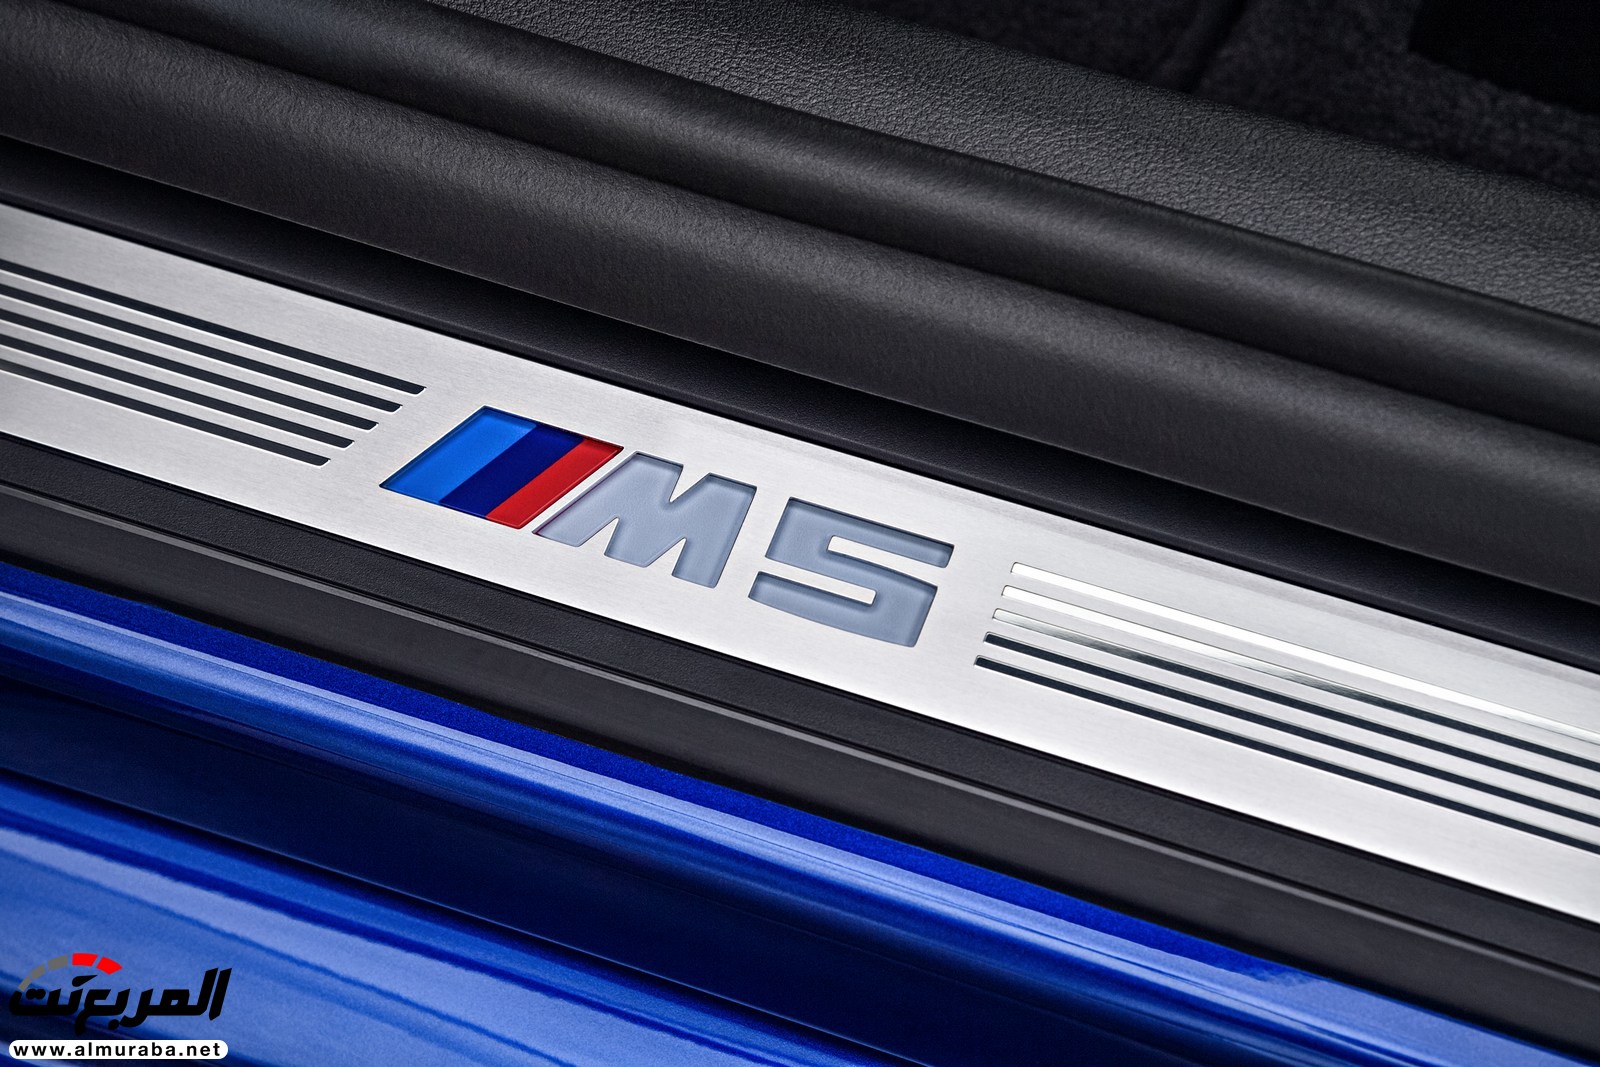 بي ام دبليو M5 2018 تكشف نفسها رسمياً بقوة ٦٠٠ حصان "صور ومواصفات" BMW 194